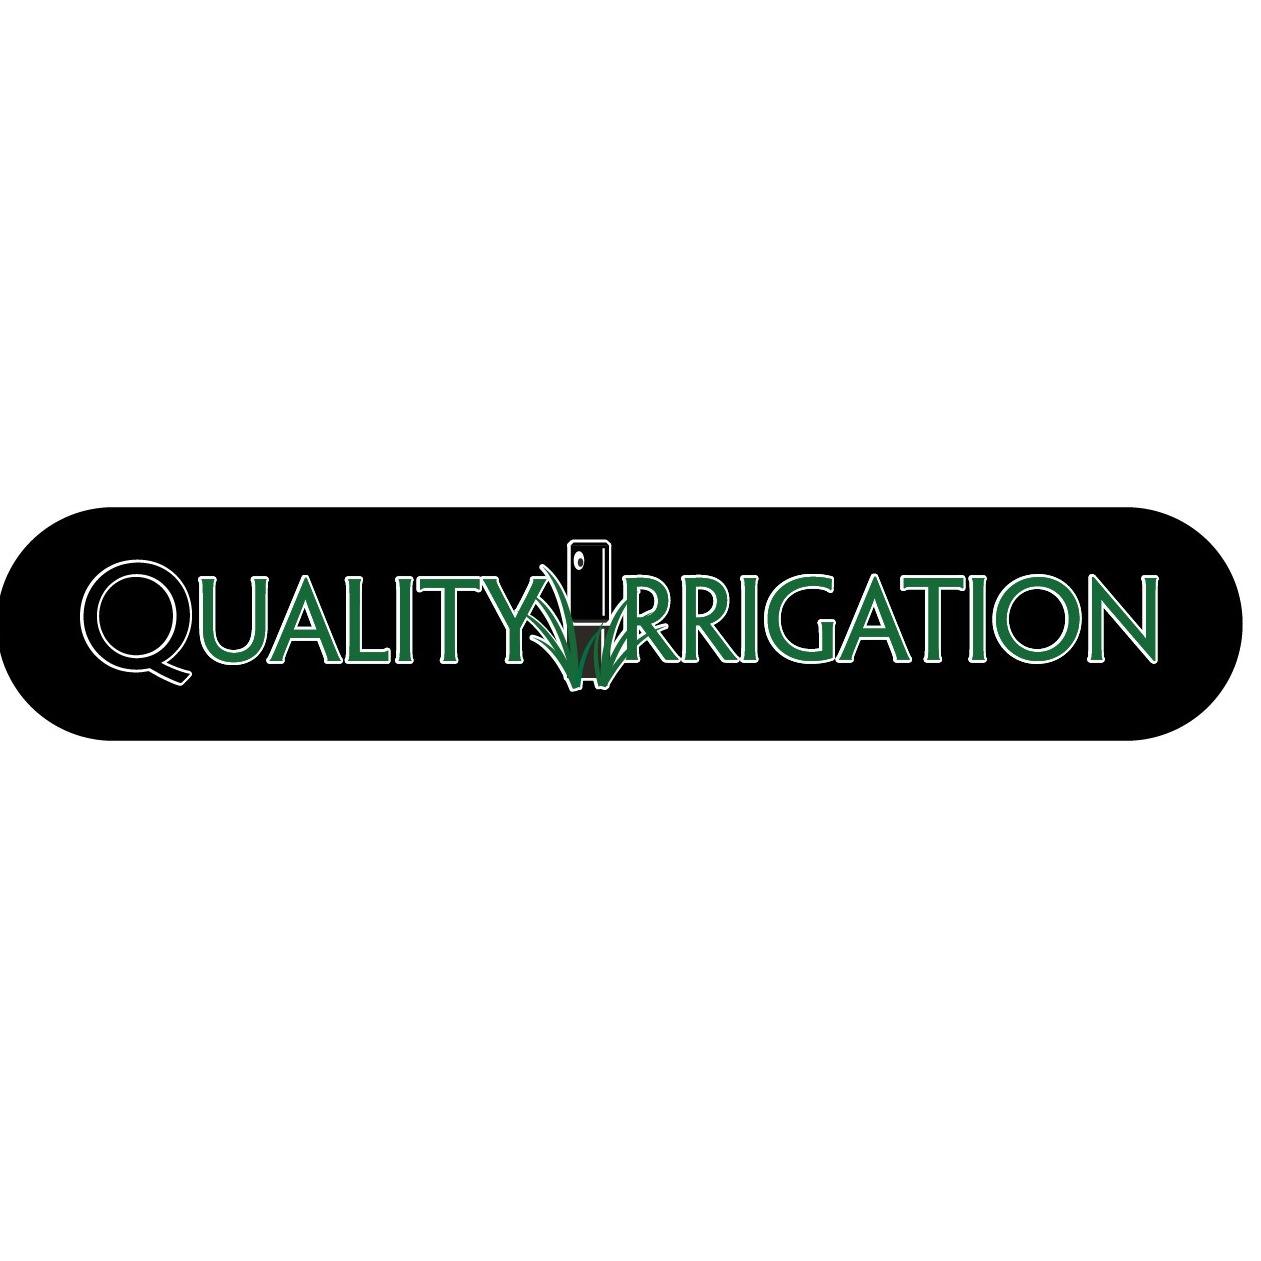 Quality Irrigation Photo